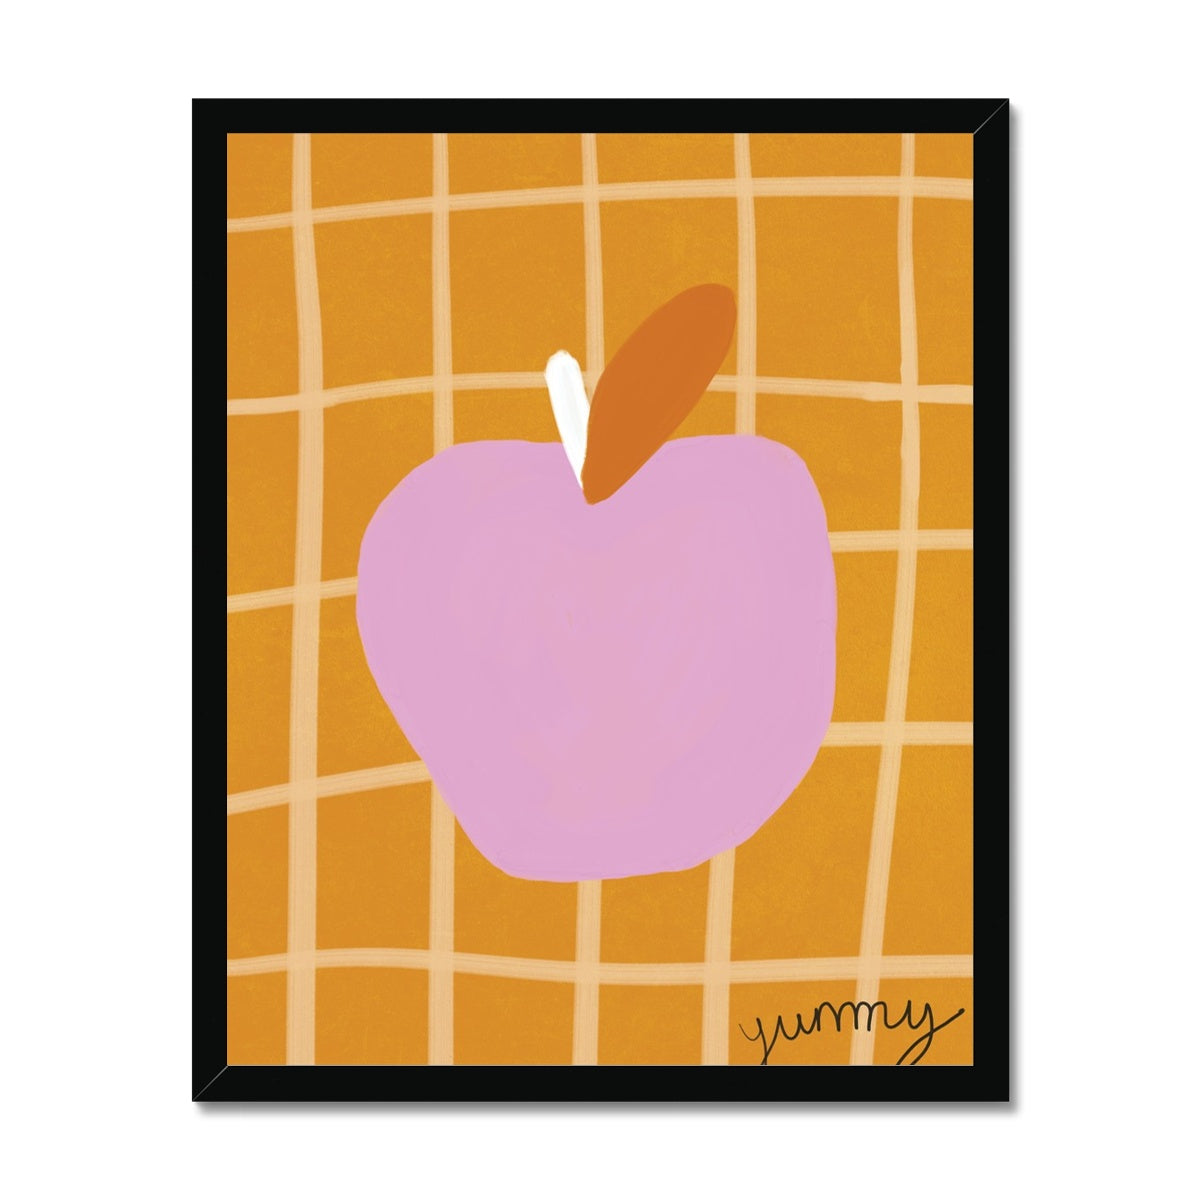 Yummy Apple Print - Brown, Pink Framed Print